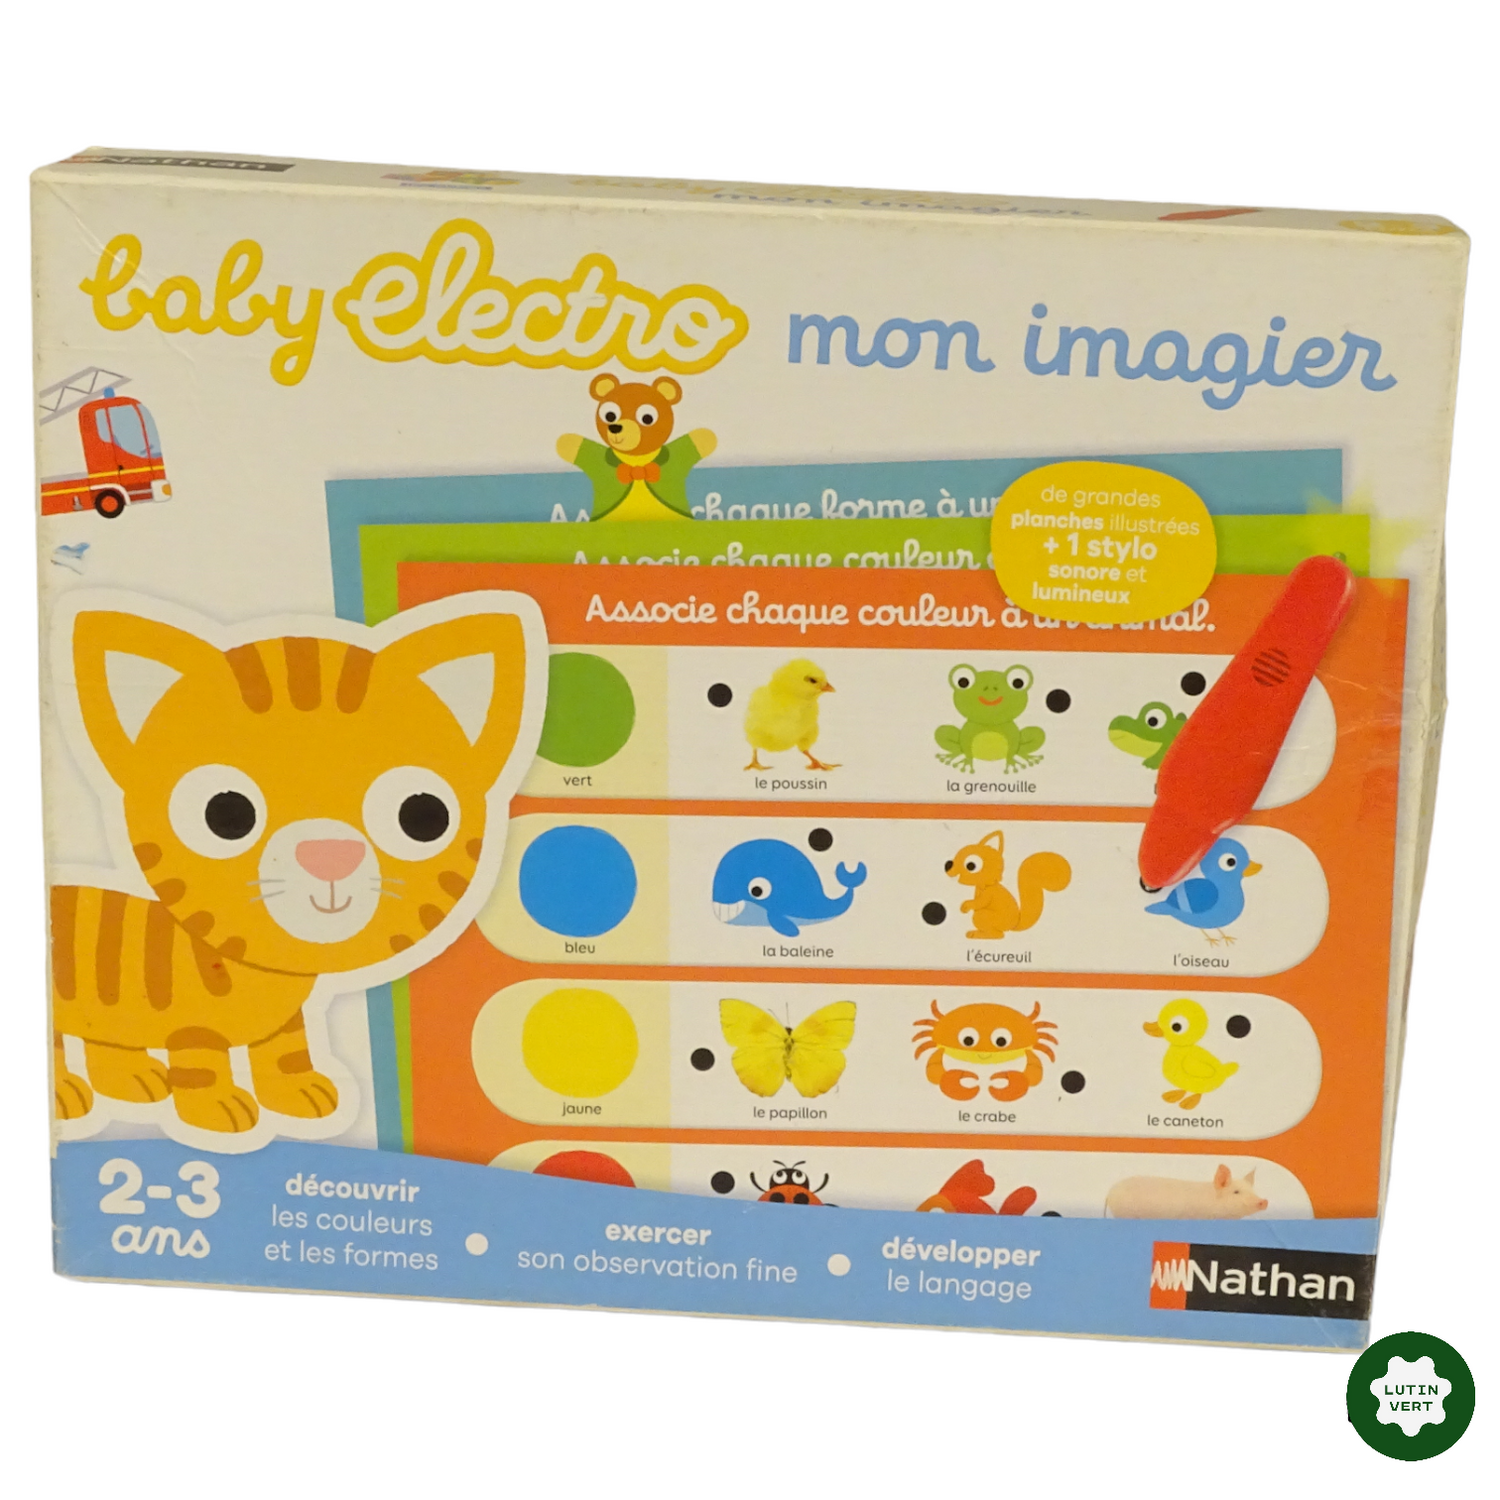 Baby electro mon imagier, jeux educatifs